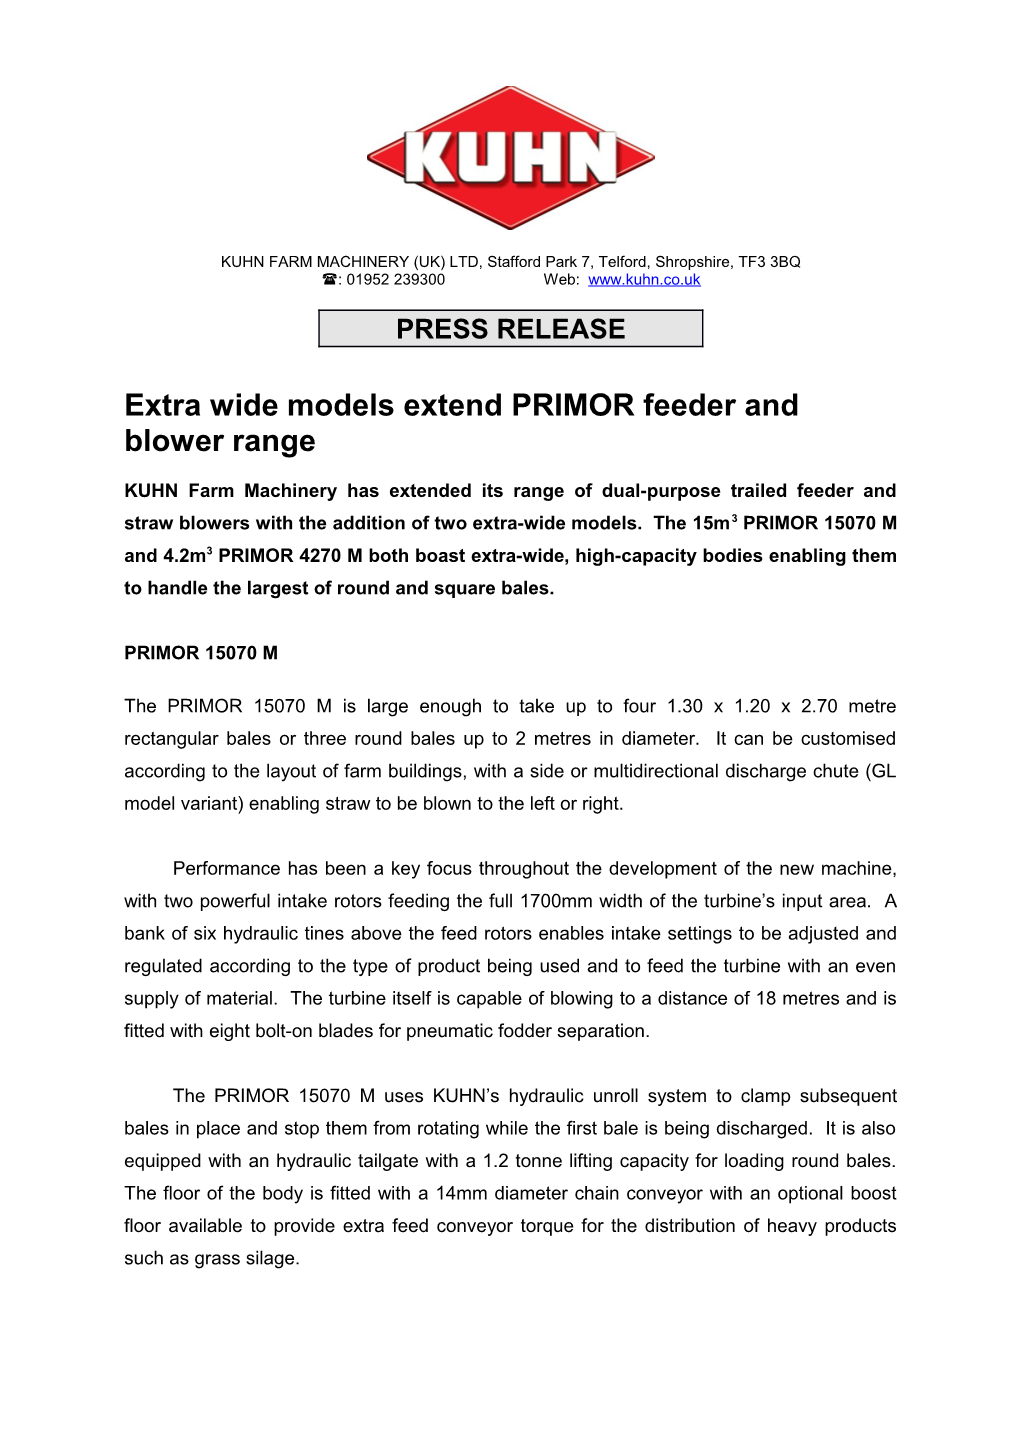 Extra Wide Models Extend PRIMOR Feeder and Blower Range